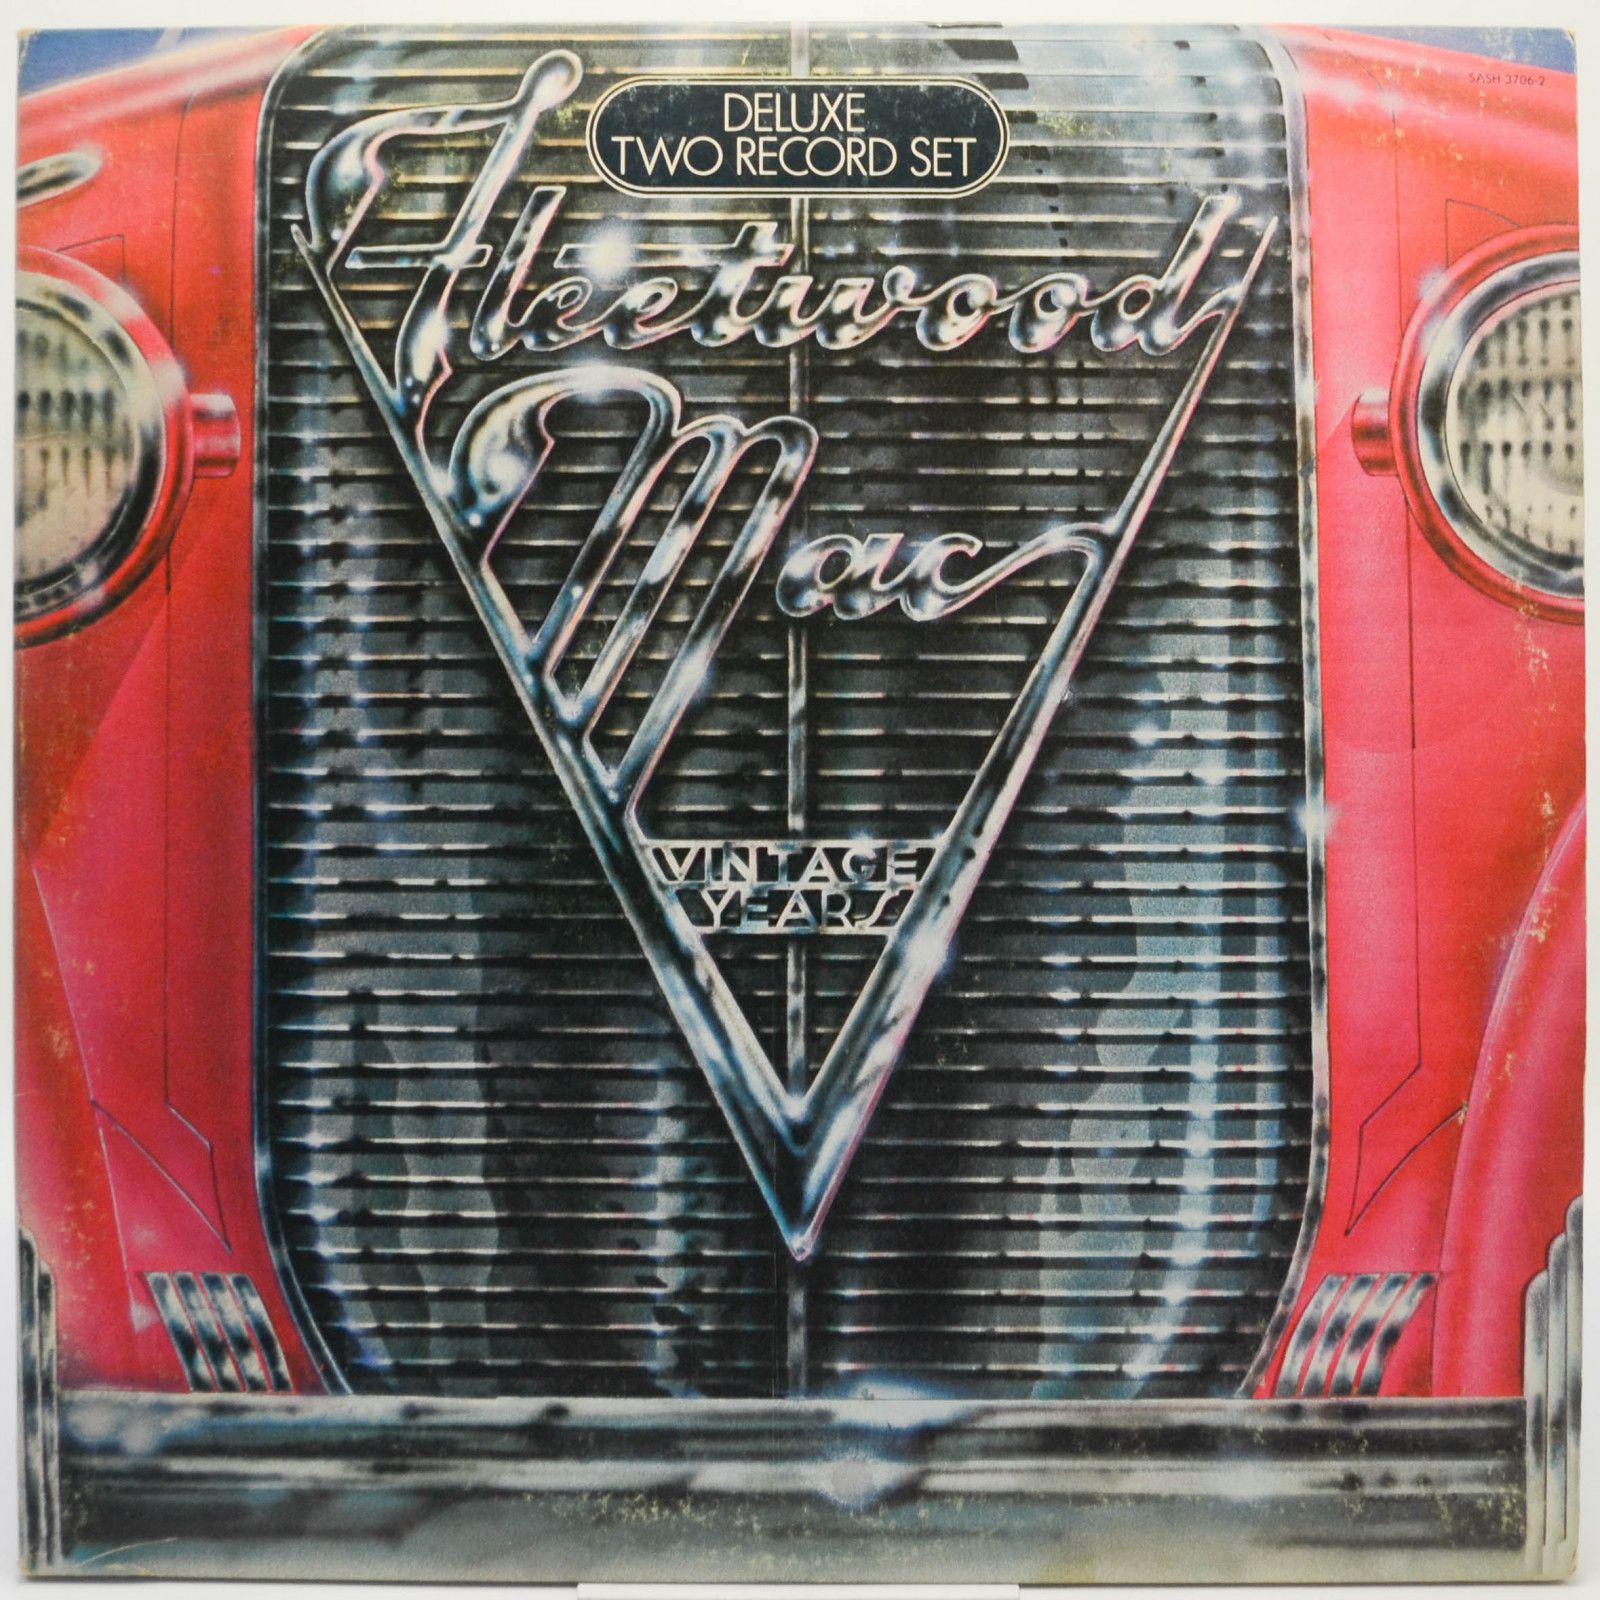 Fleetwood Mac — Vintage Years (2LP, USA), 1975